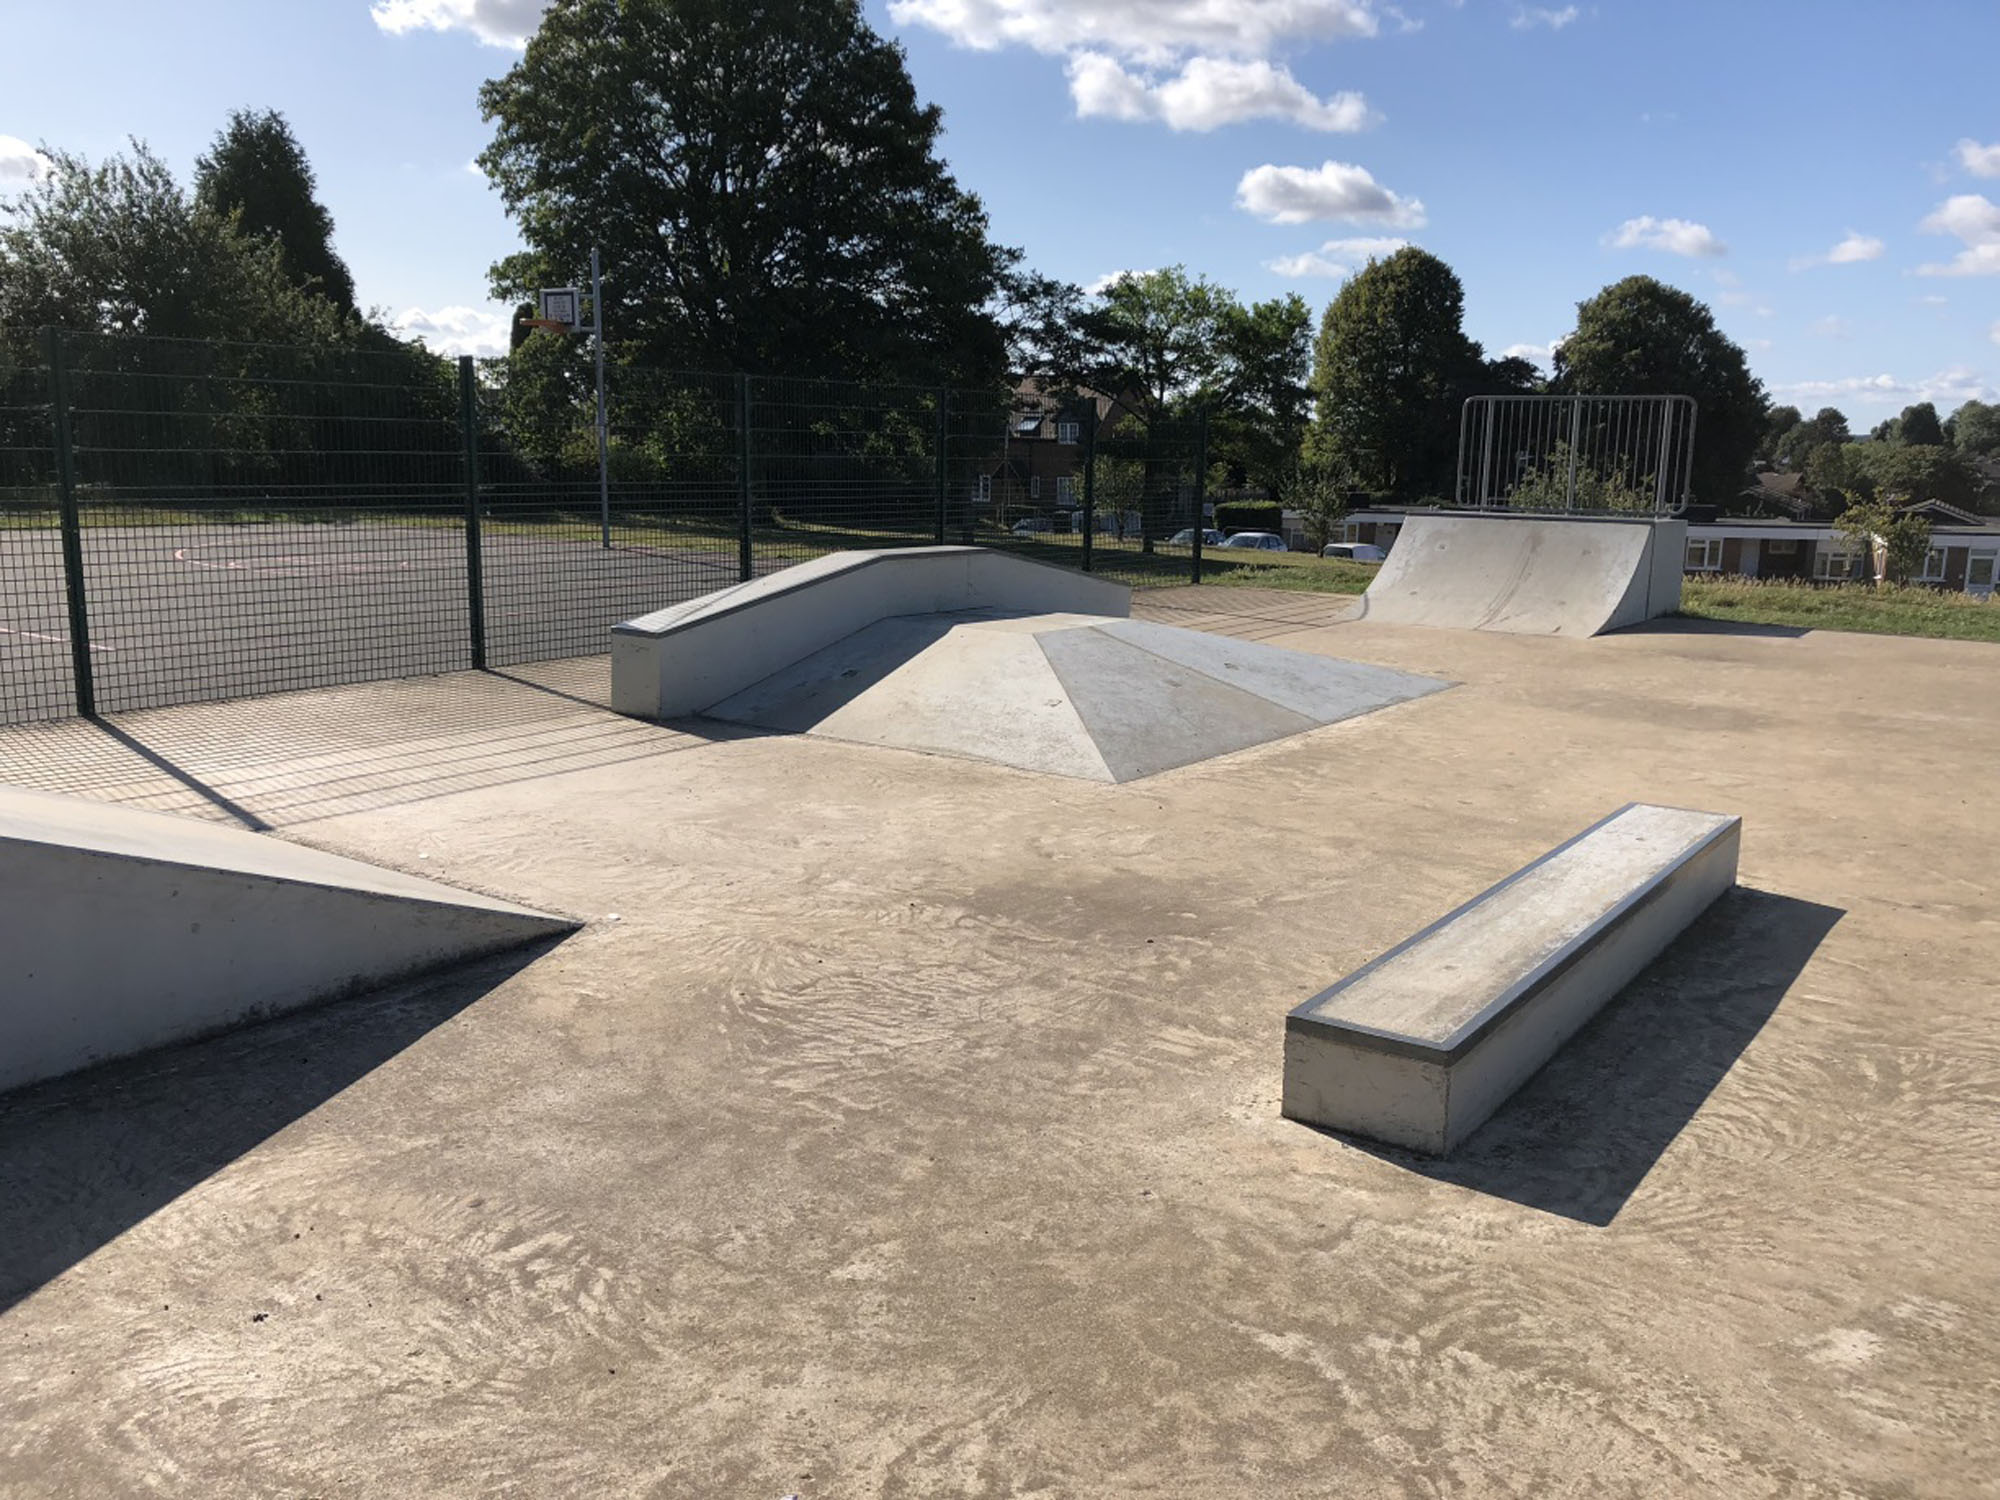 sawbridgeworth skatepark vantorts park review tips skateboarding in hertfordshire u k